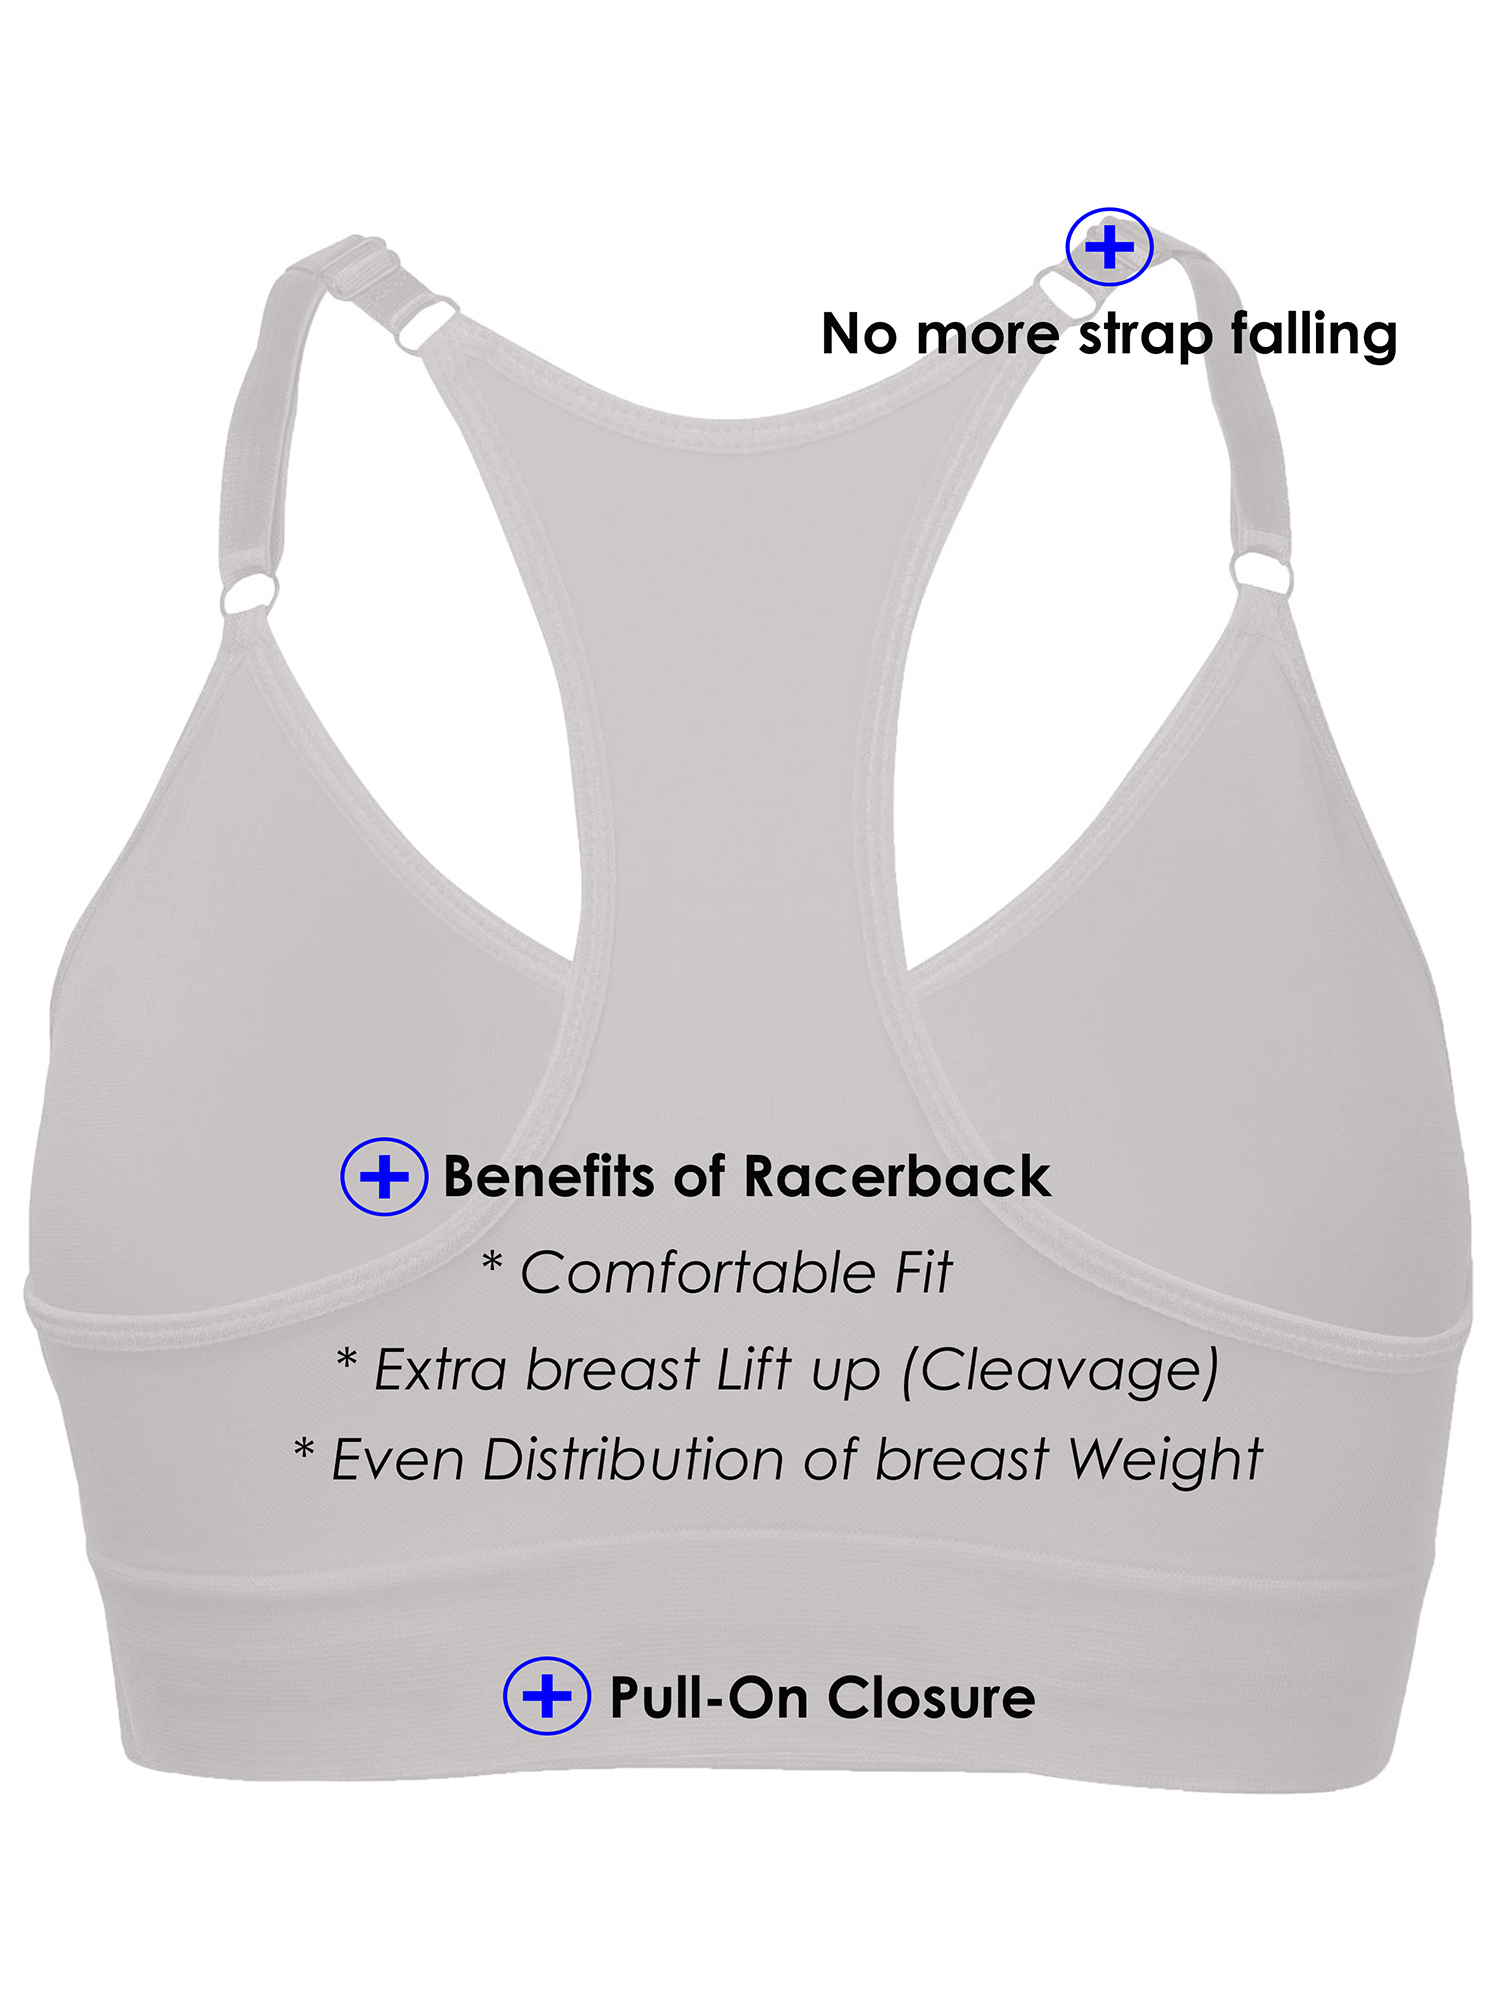 Women's Sports Bras Yoga Lounge Wireless Racerback Bra Small to 2XL Sizes Multi-Pack - image 7 of 8